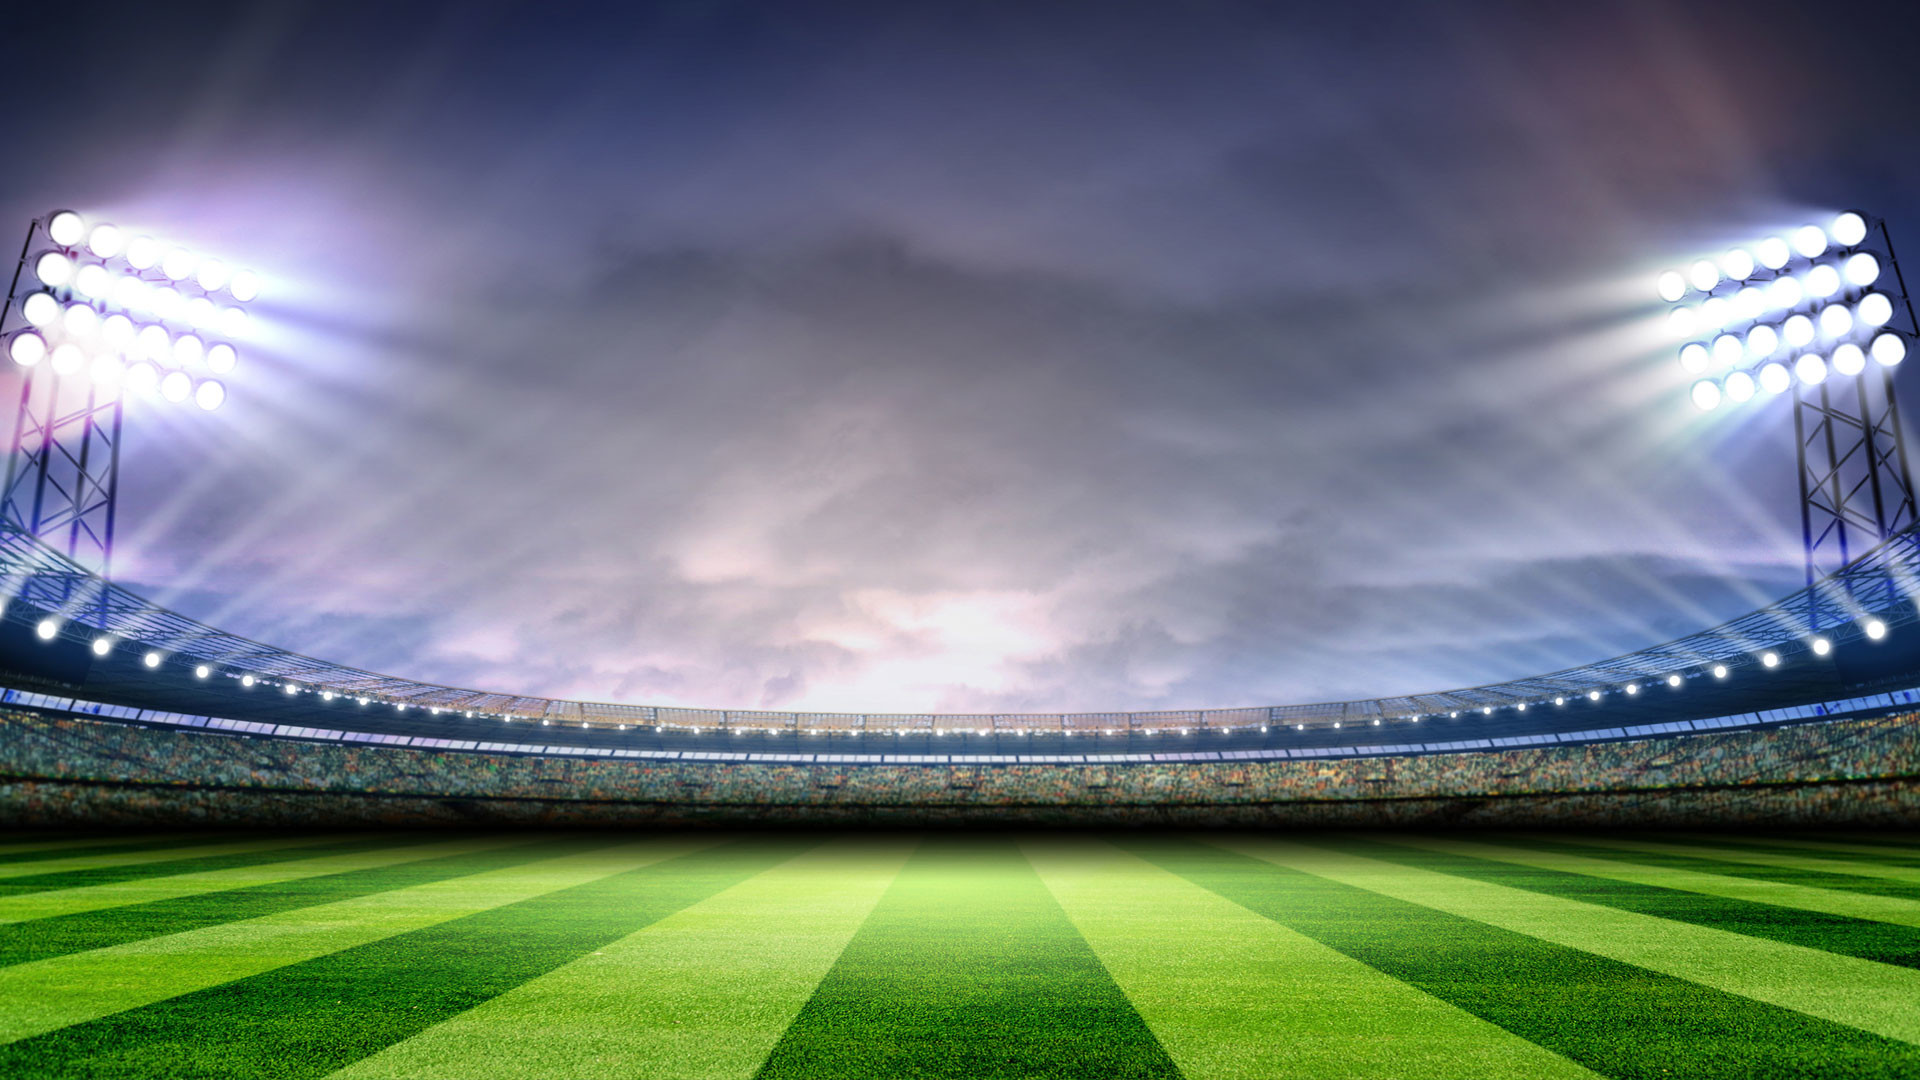 papier peint fussball,stade,ciel,atmosphère,stade spécifique au football,herbe